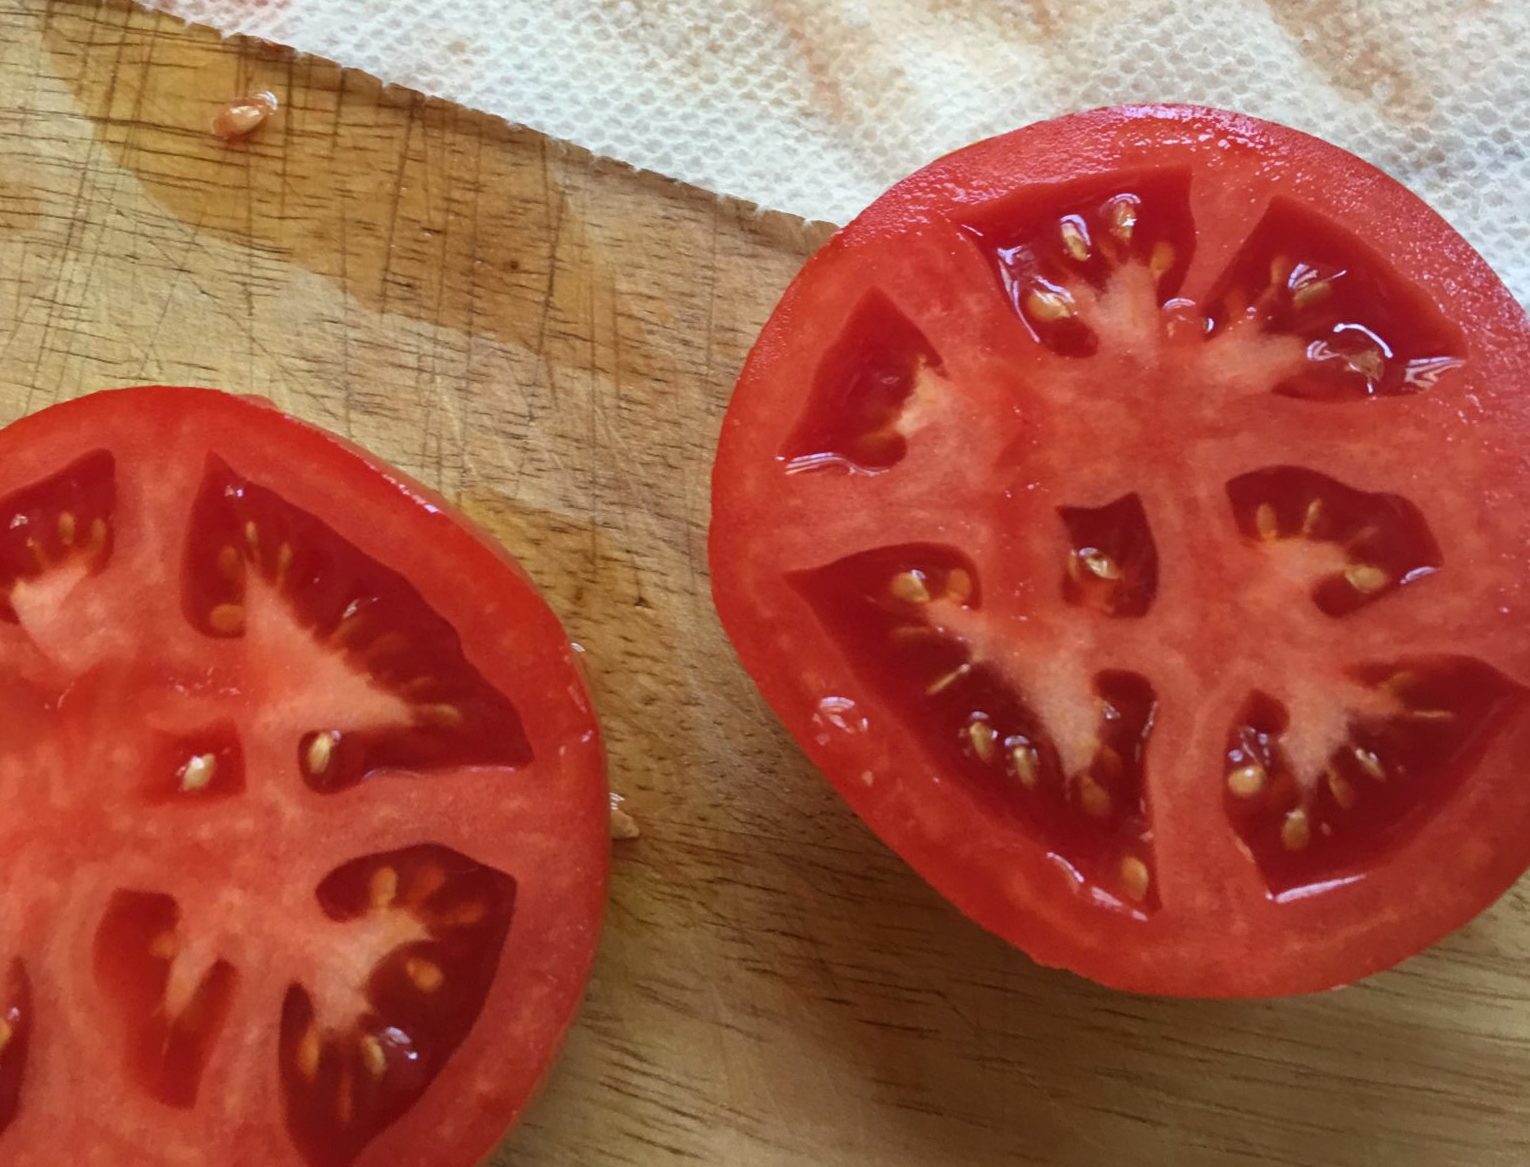 Halved tomatoes